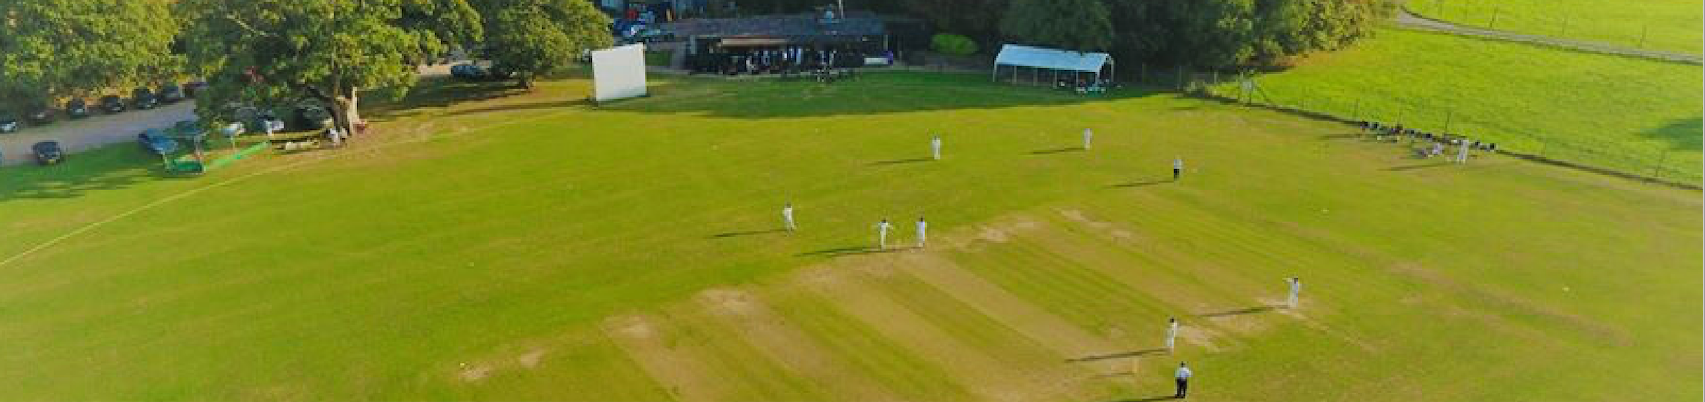 Knebworth Park Cricket Club